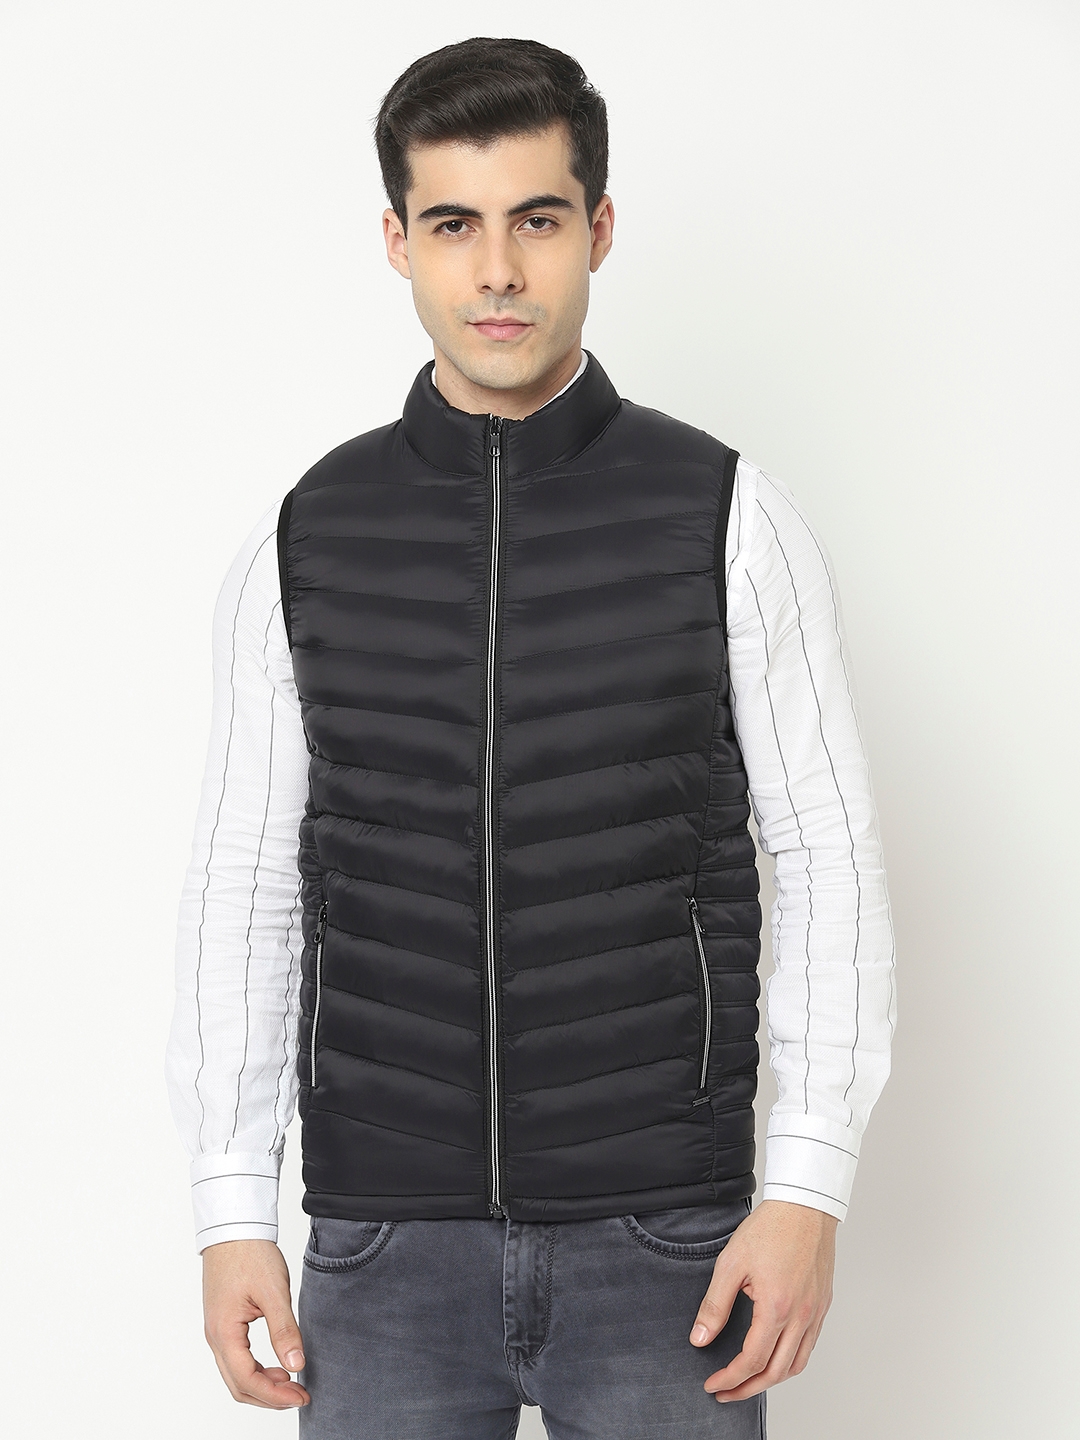 Black vest illustration. Black sleeveless puffer jacket 13991827 Vector Art  at Vecteezy